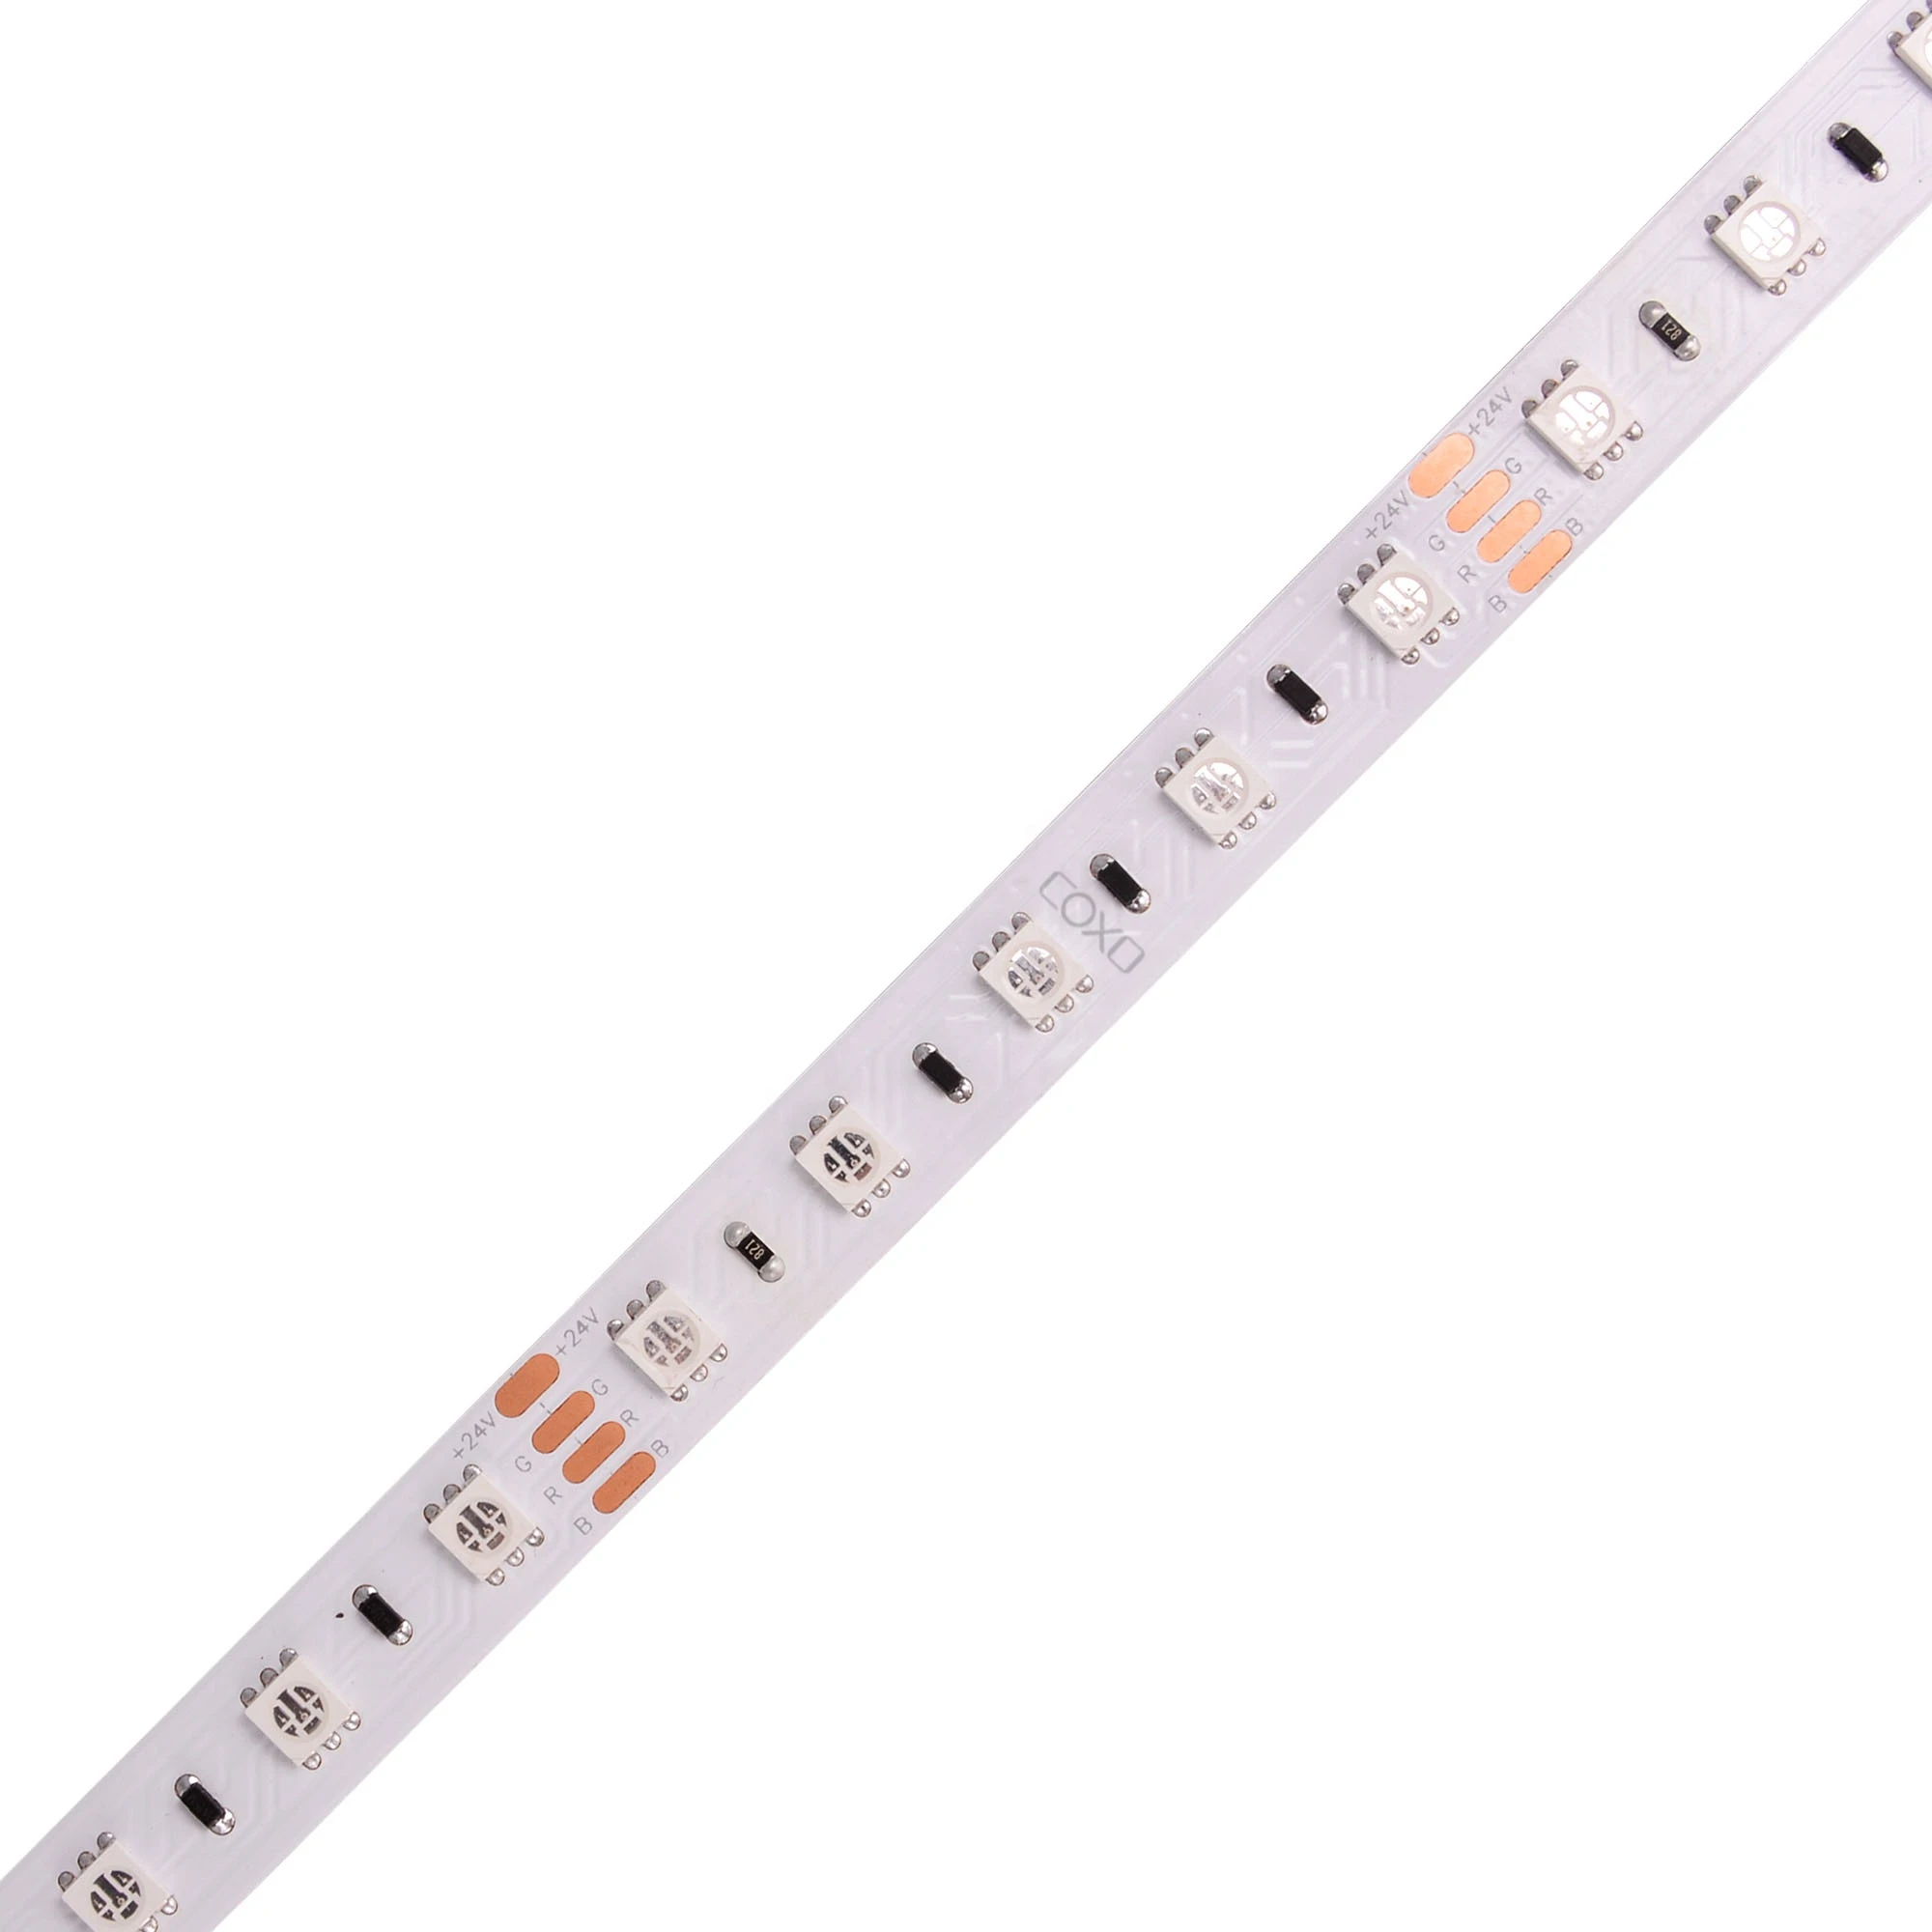 Ultra long length 20m/roll Constant current high brightness 5050 rgb led strip